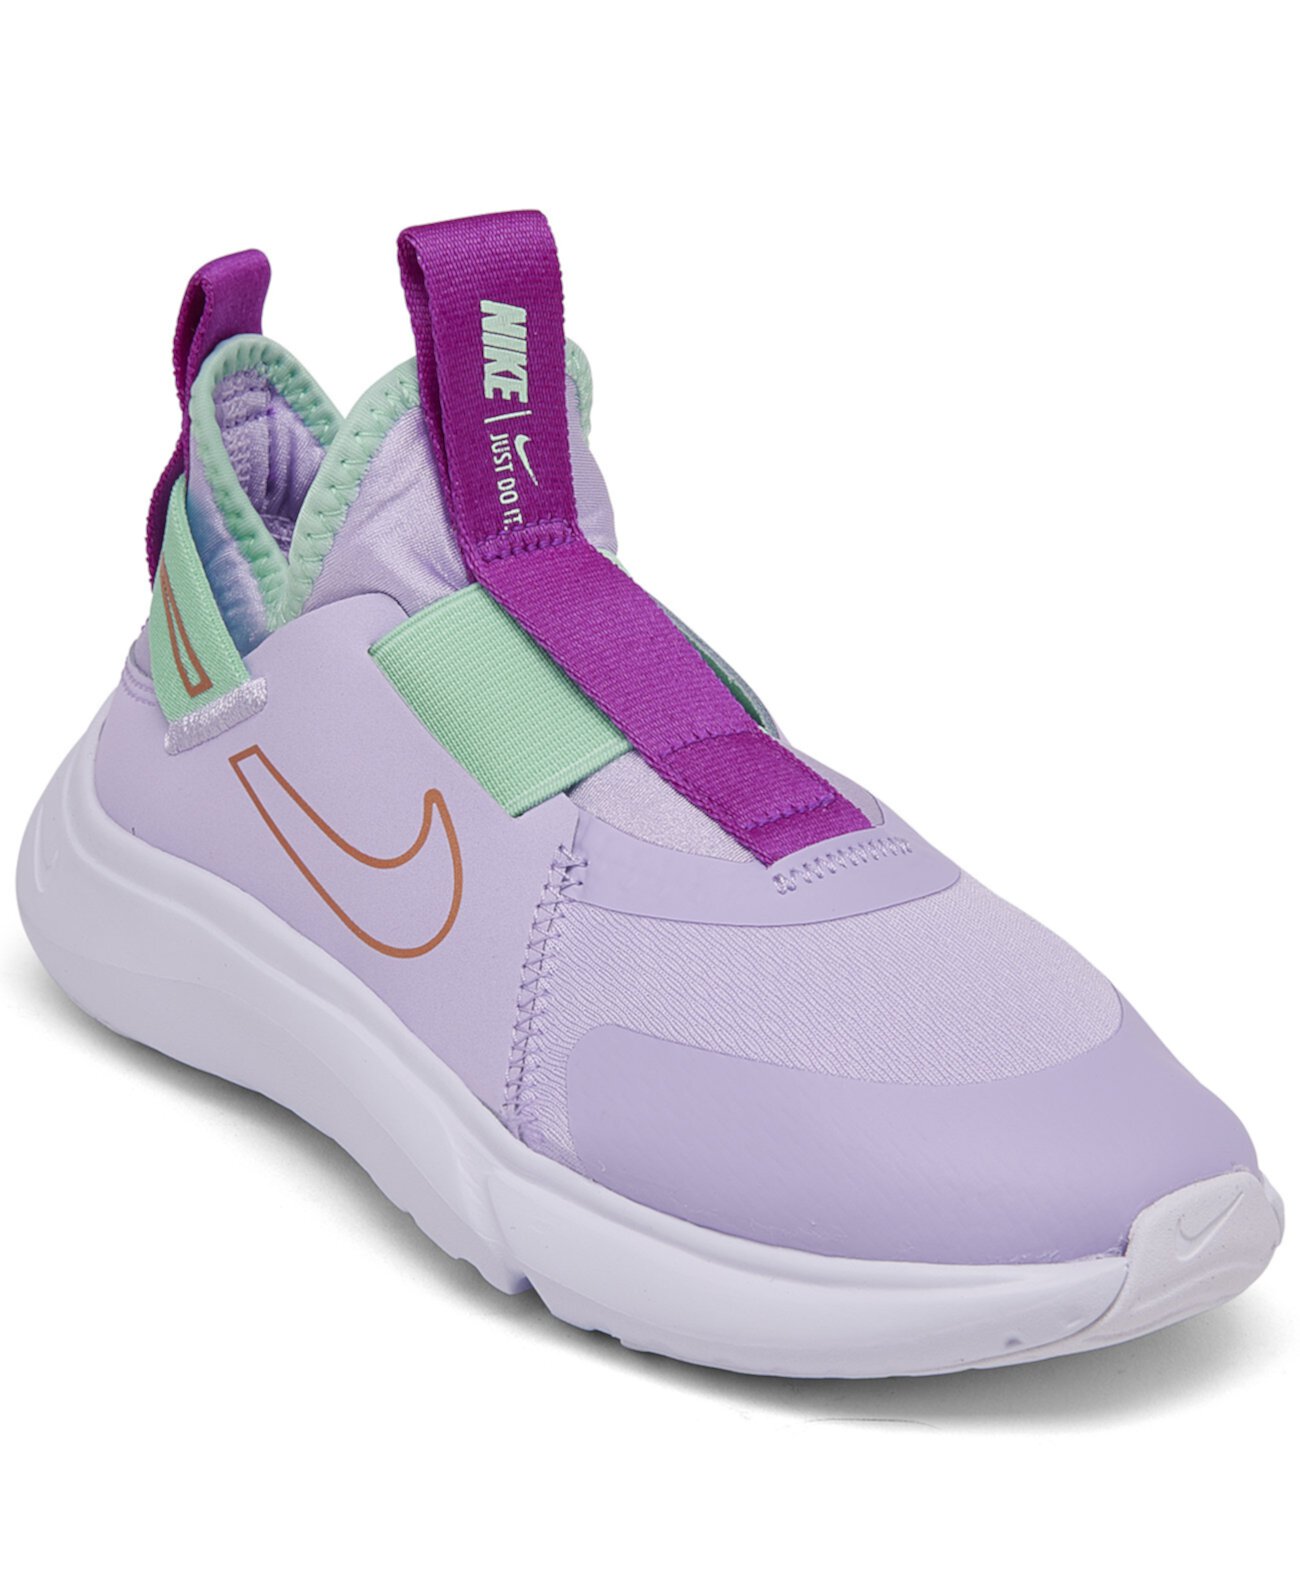 Беговые кроссовки Little Girls Flex Plus от Finish Line Nike